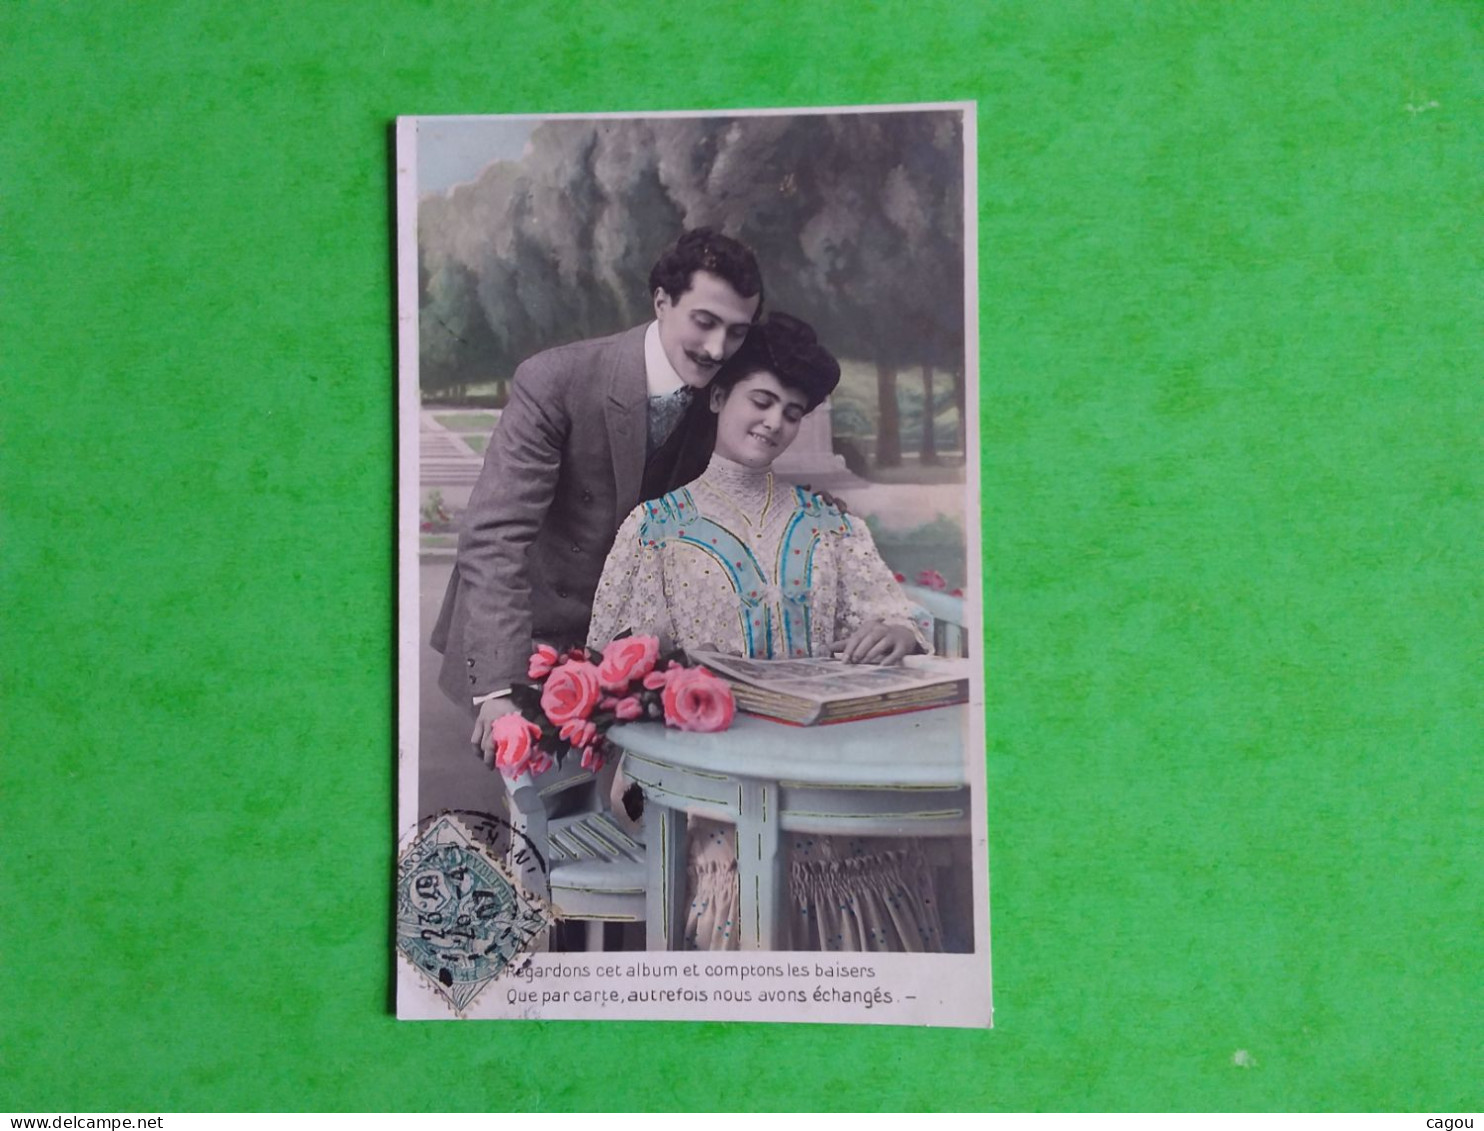 CACHET ARRIVEE SAINT HERBLAIN LOIRE INFÉRIEURE BUREAU DE DISTRIBUTION SUR CARTE POSTALE - Manual Postmarks